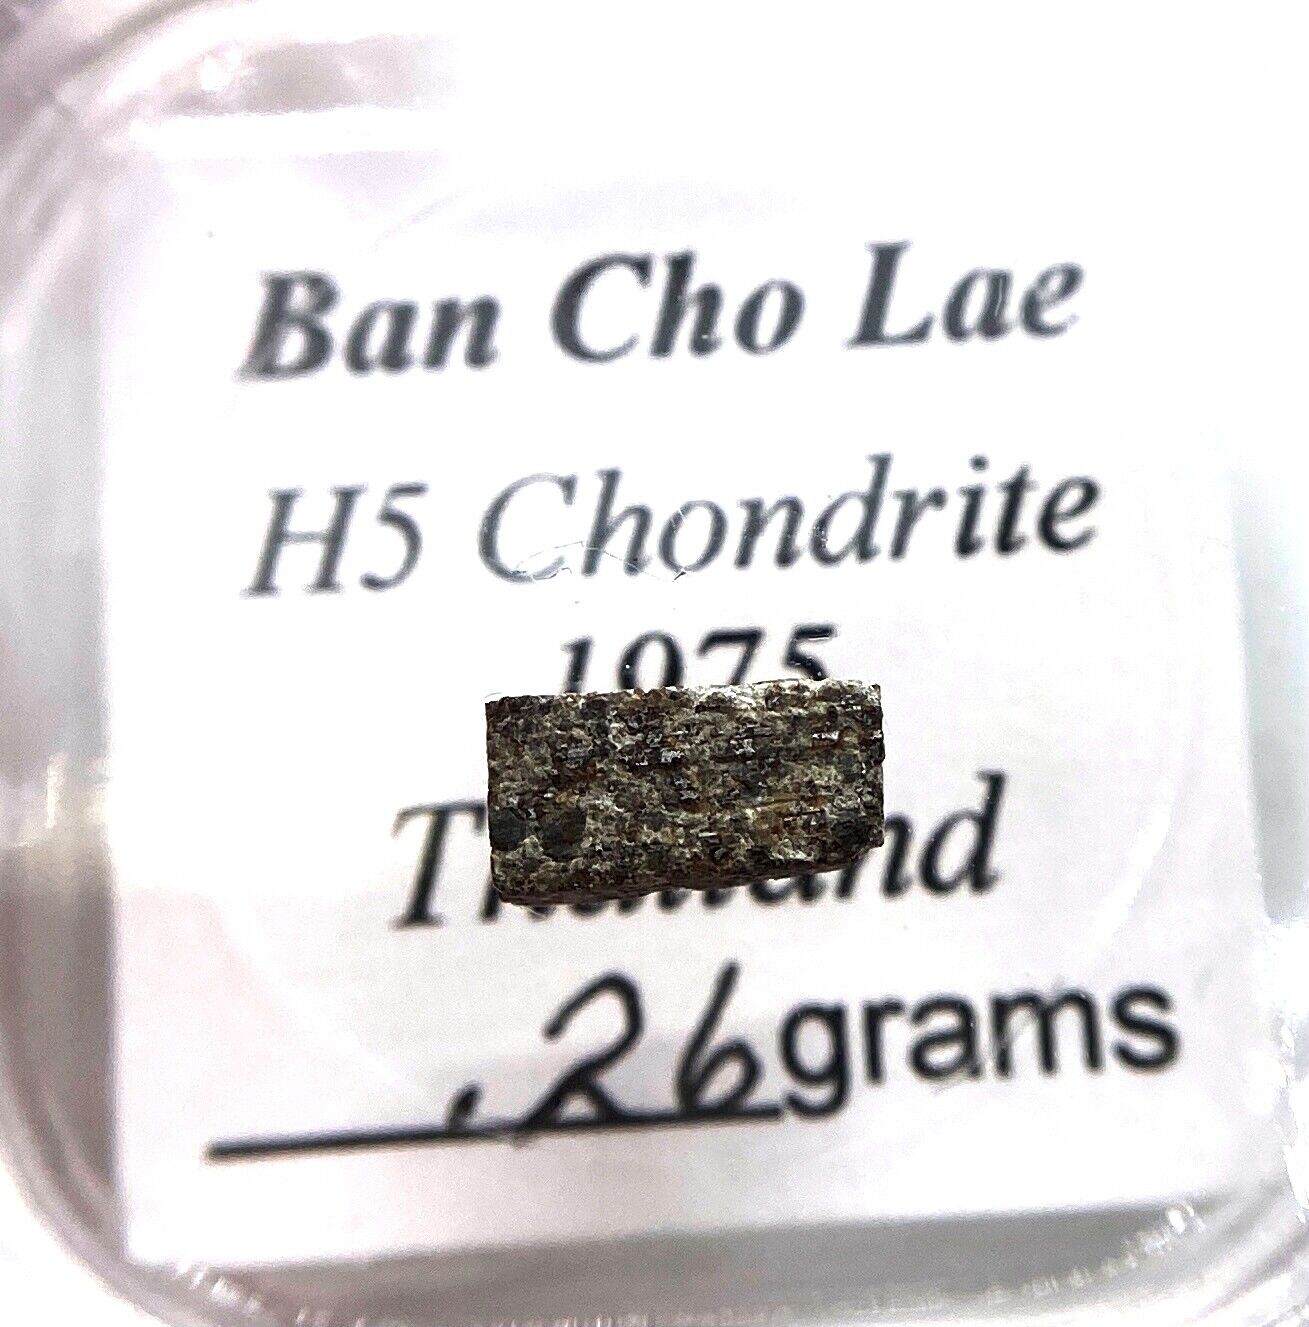 0.26 gram Ban Cho Lae meteorite slice - Thailand H5 chondrite #